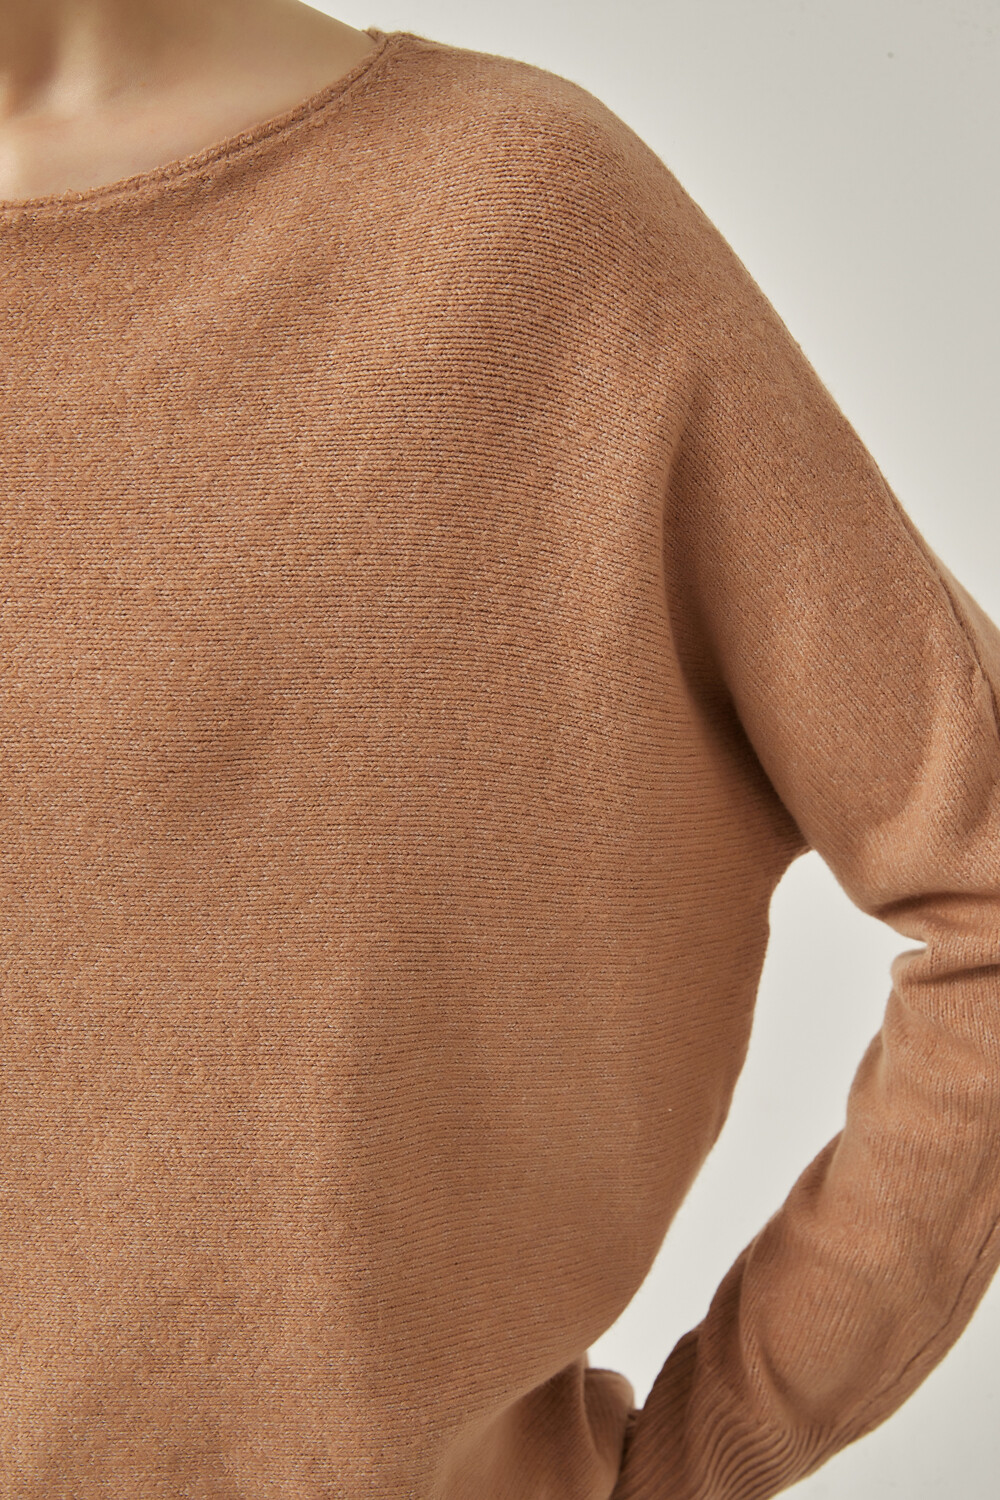 Sweater Eshe Taupe / Mink / Vison